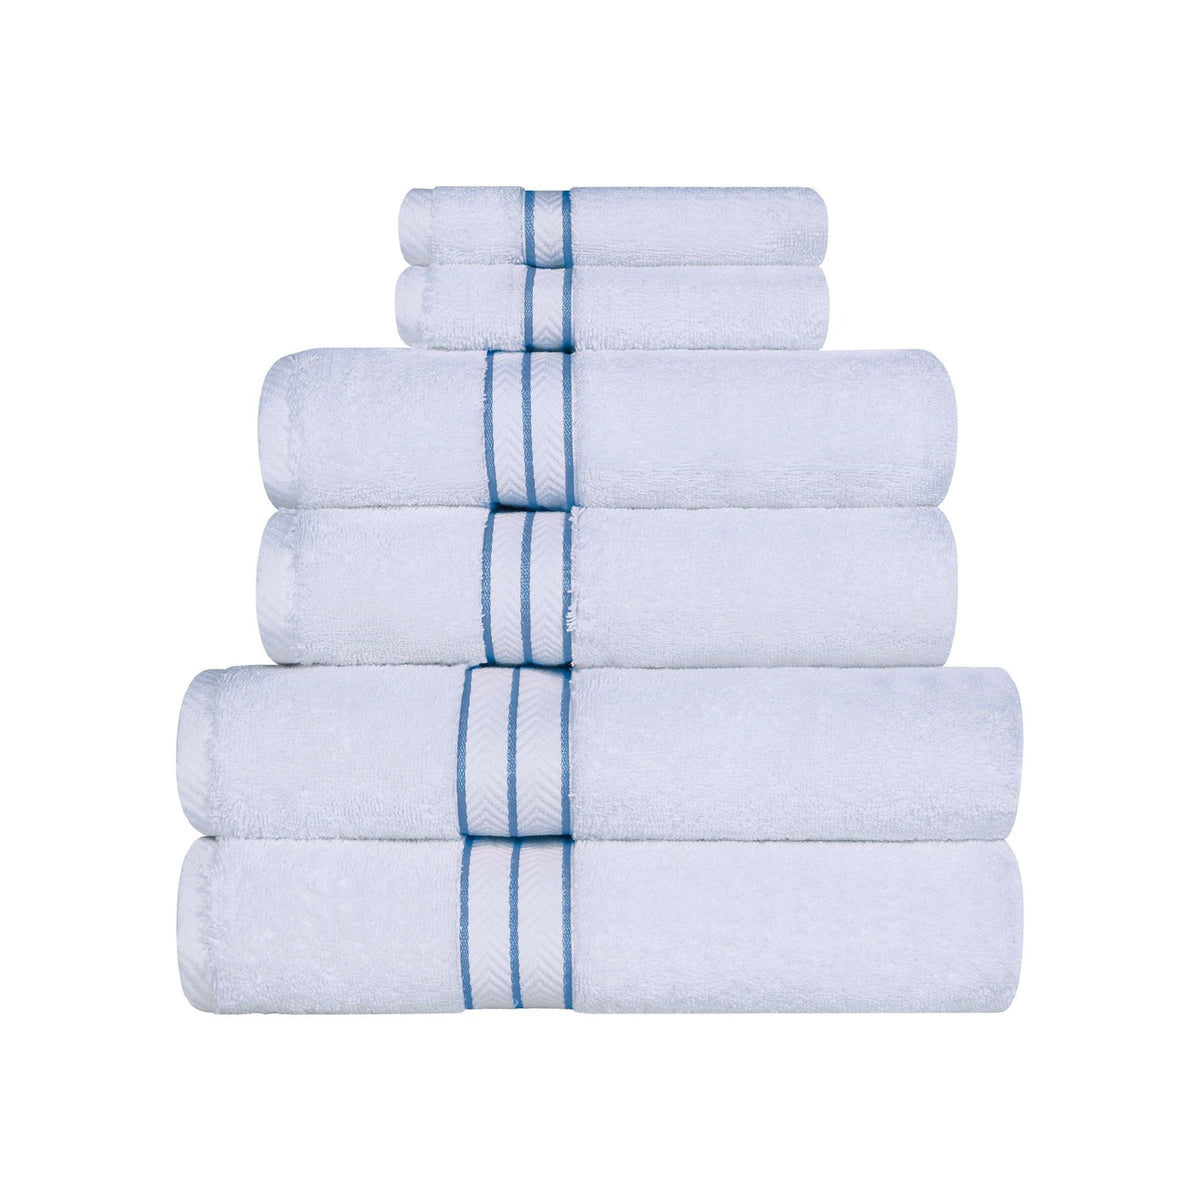 Turkish Cotton Heavyweight Ultra-Plush 6 Piece Bath Towel Set -  White/light blue